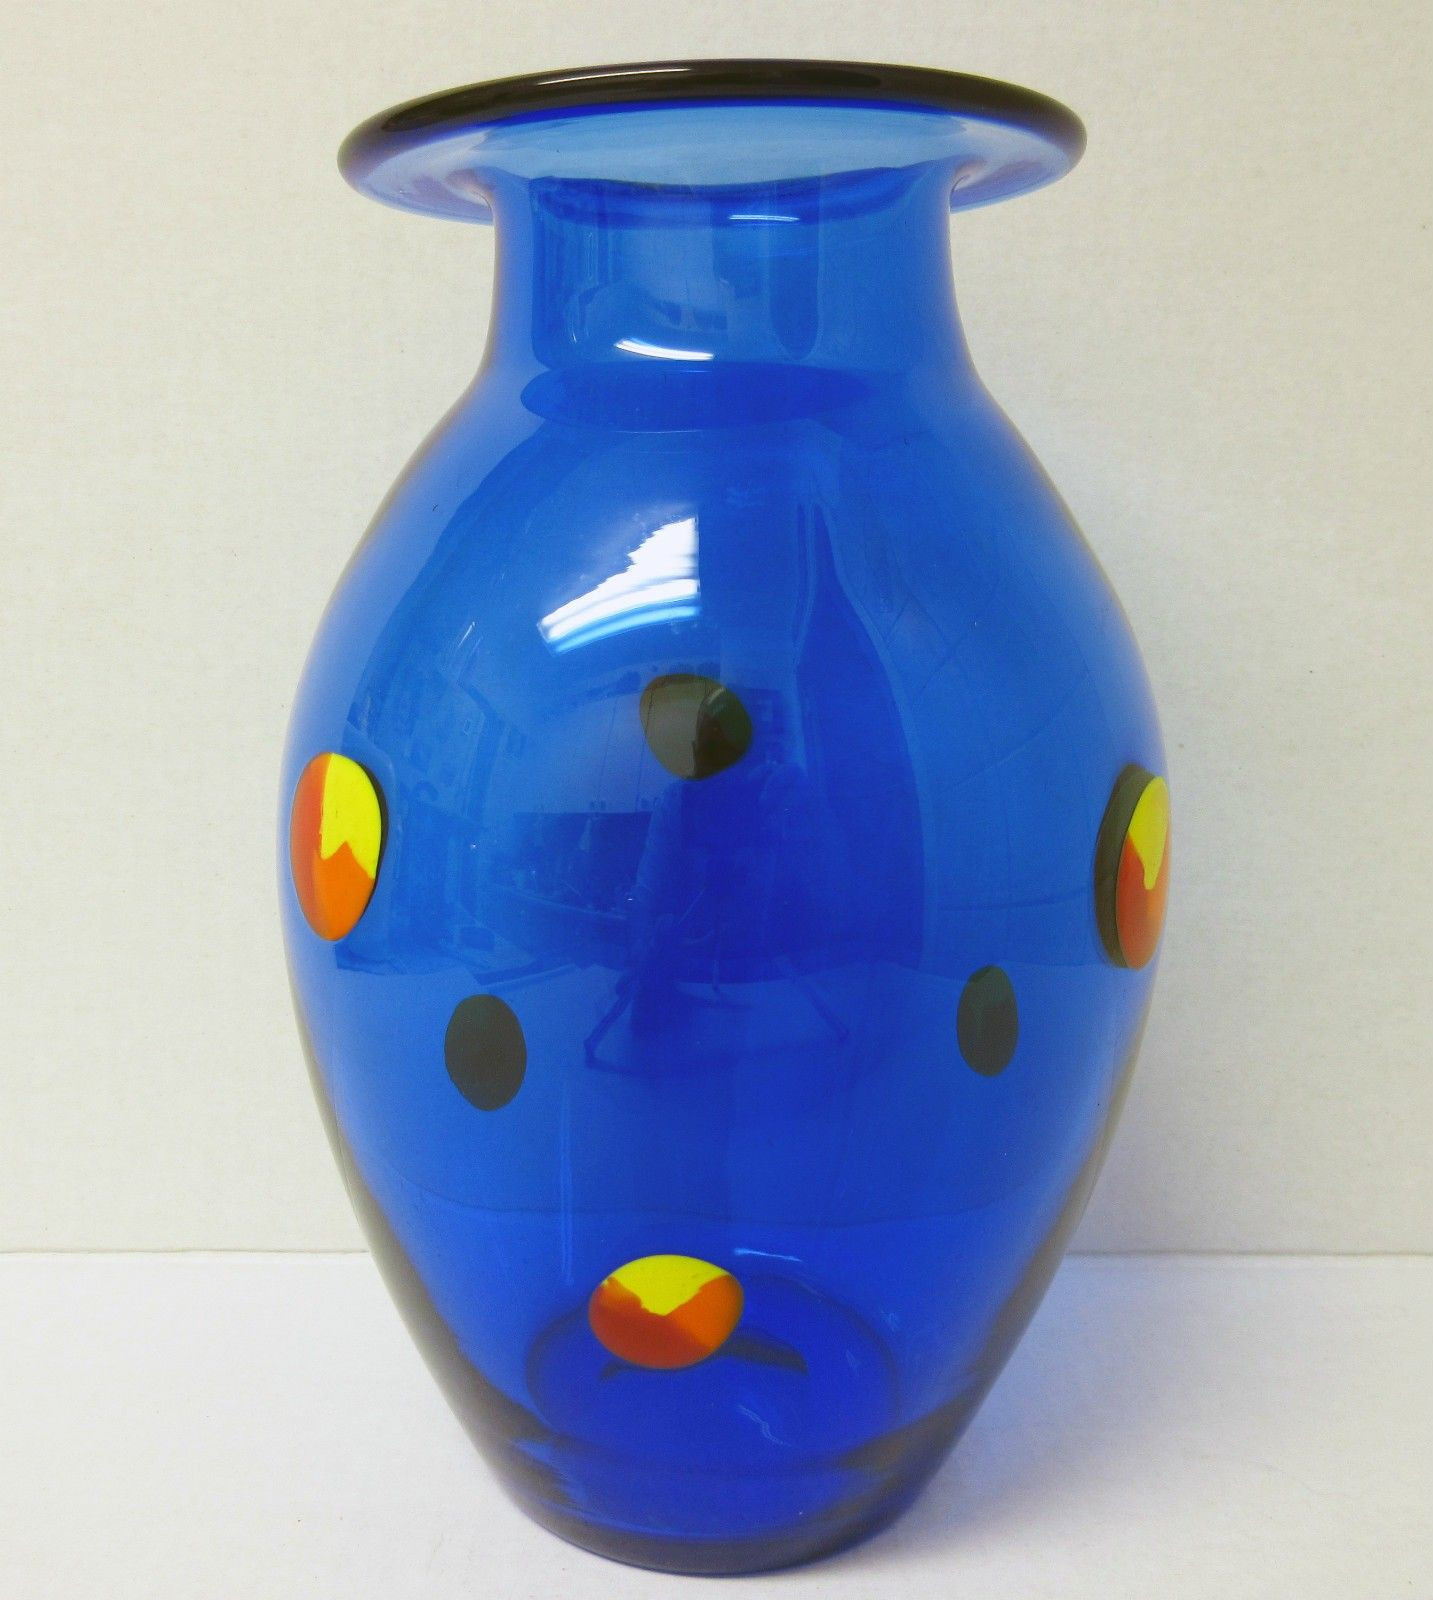 23 Stunning 8 Glass Vase 2024 free download 8 glass vase of cobalt blue with multi color prunts orrefors sweden art glass vase intended for cobalt blue with multi color prunts orrefors sweden art glass vase measures approximately 8 1 